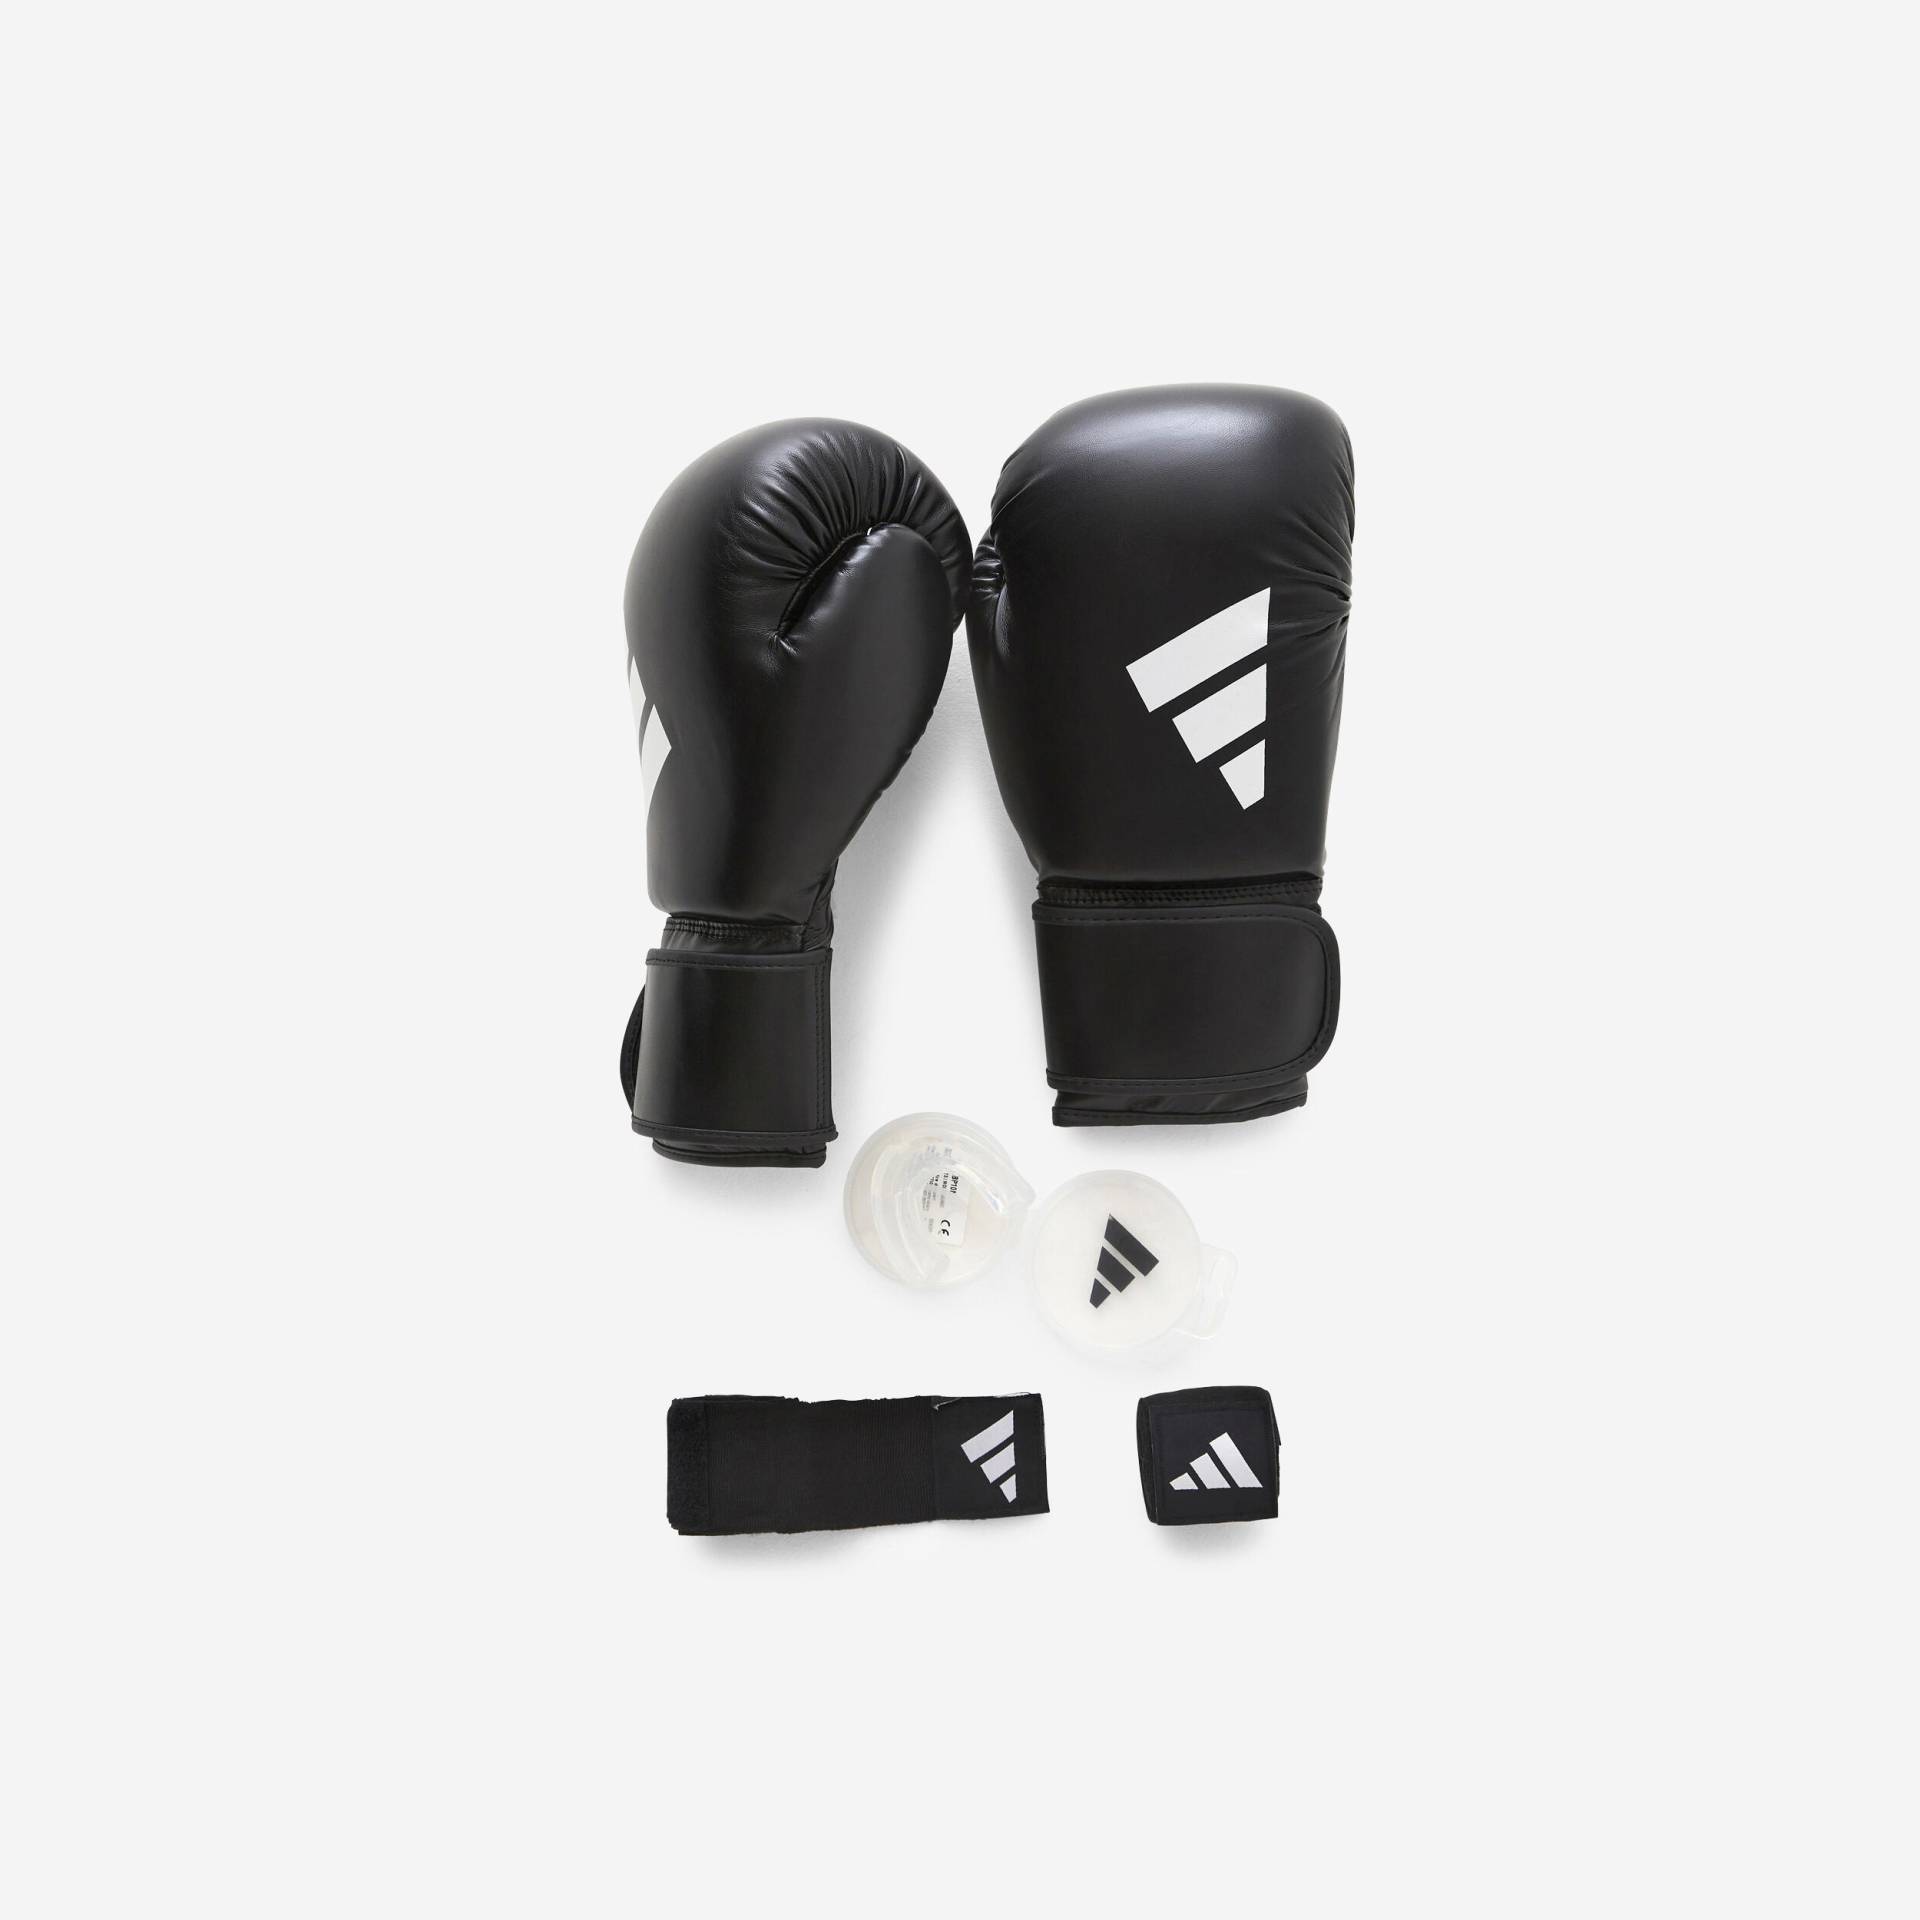 Boxing-Set - Adidas V2 (Handschuhe + Bandagen + Zahnschutz) von Adidas